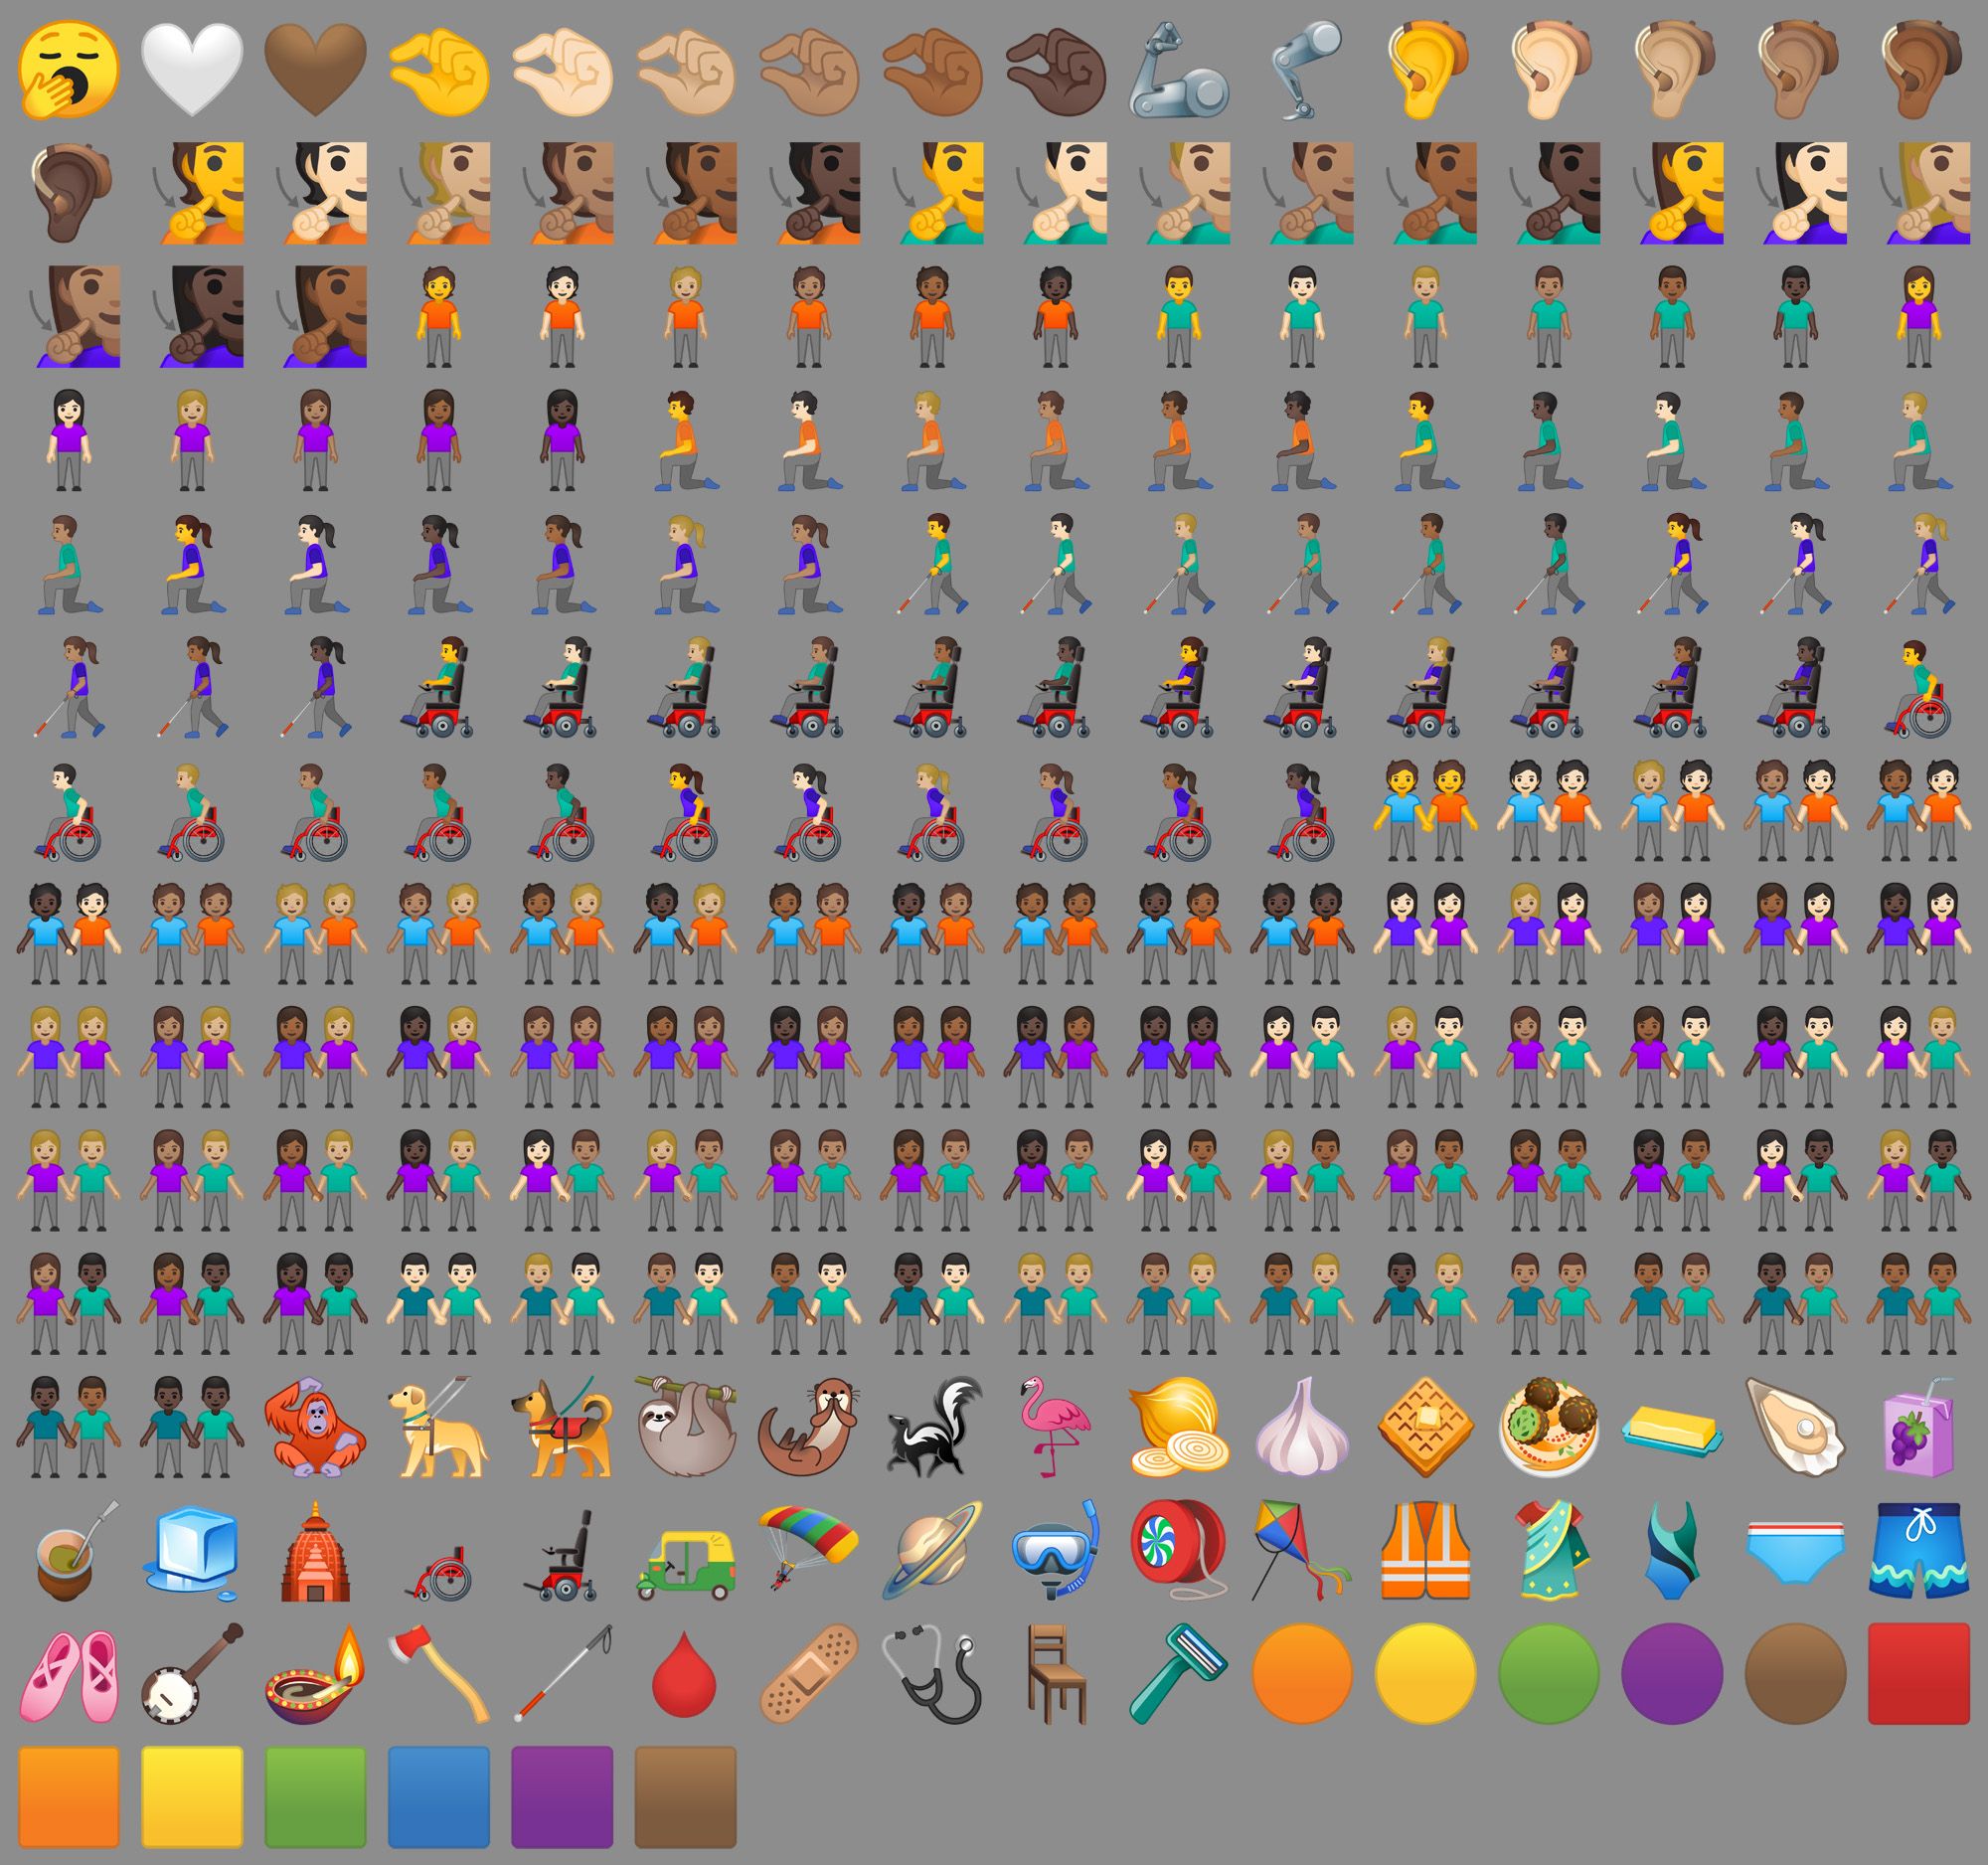 Emojipedia-2019-Emoji-Changelog-Android-10.0-Emoji-12.0-New-Emojis